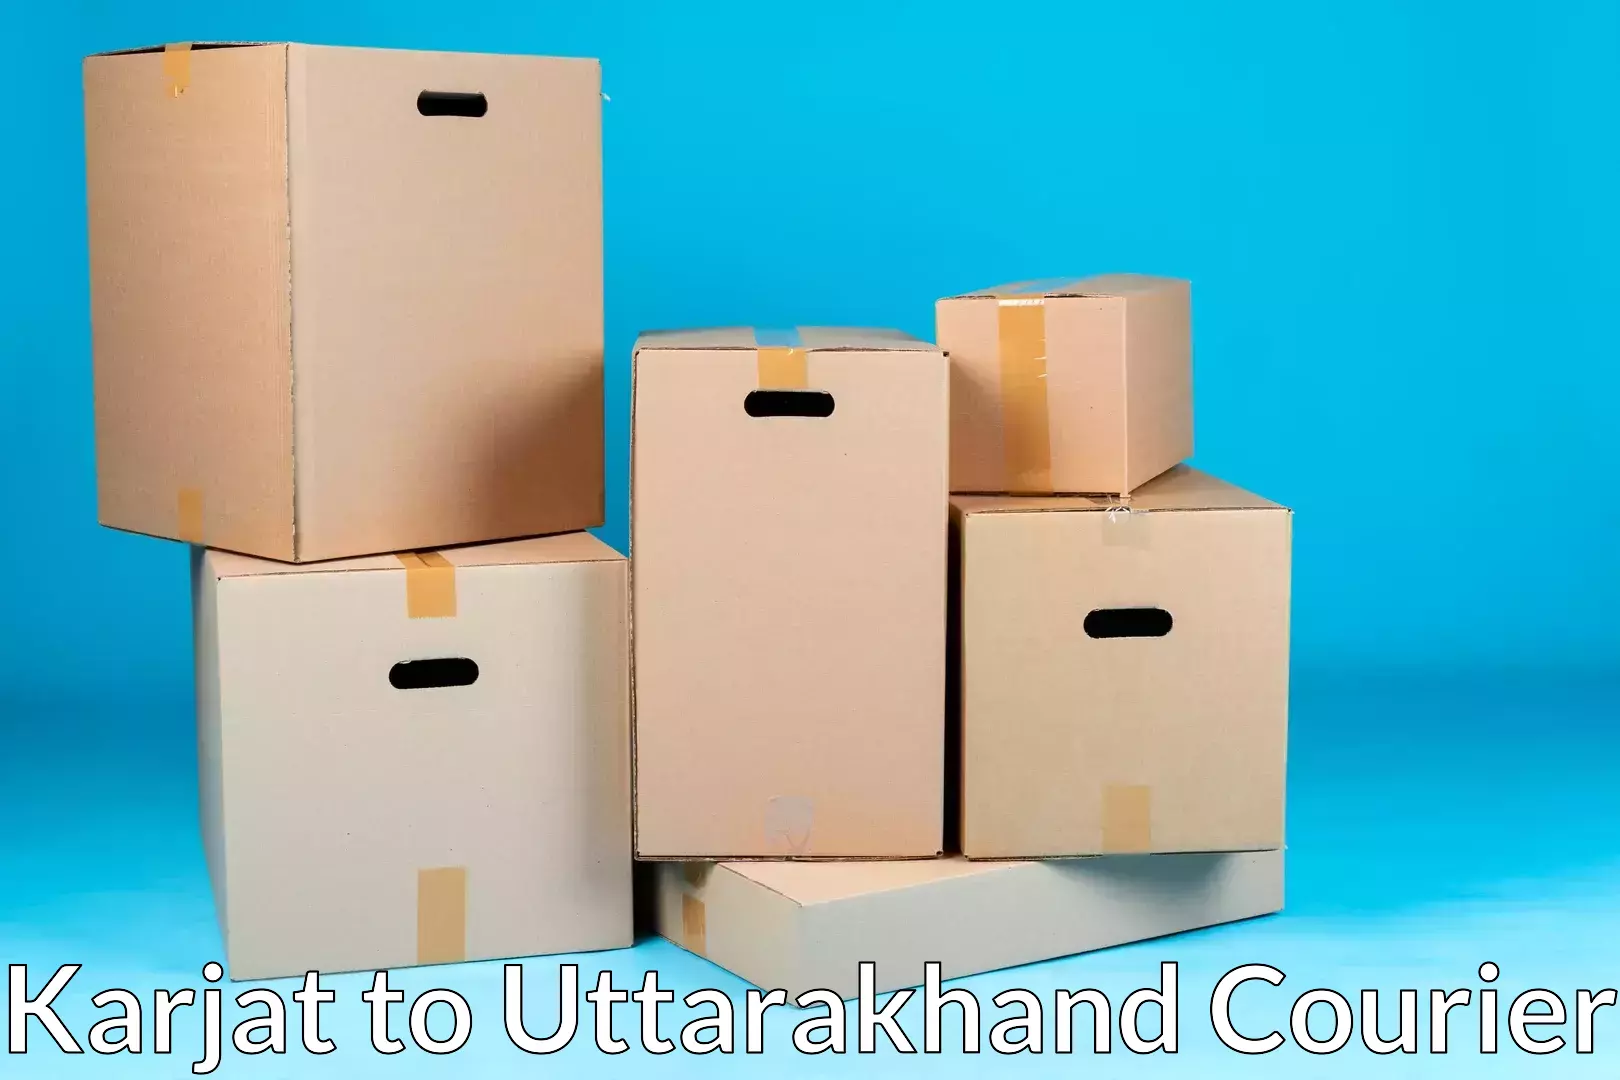 Furniture delivery service Karjat to Dehradun